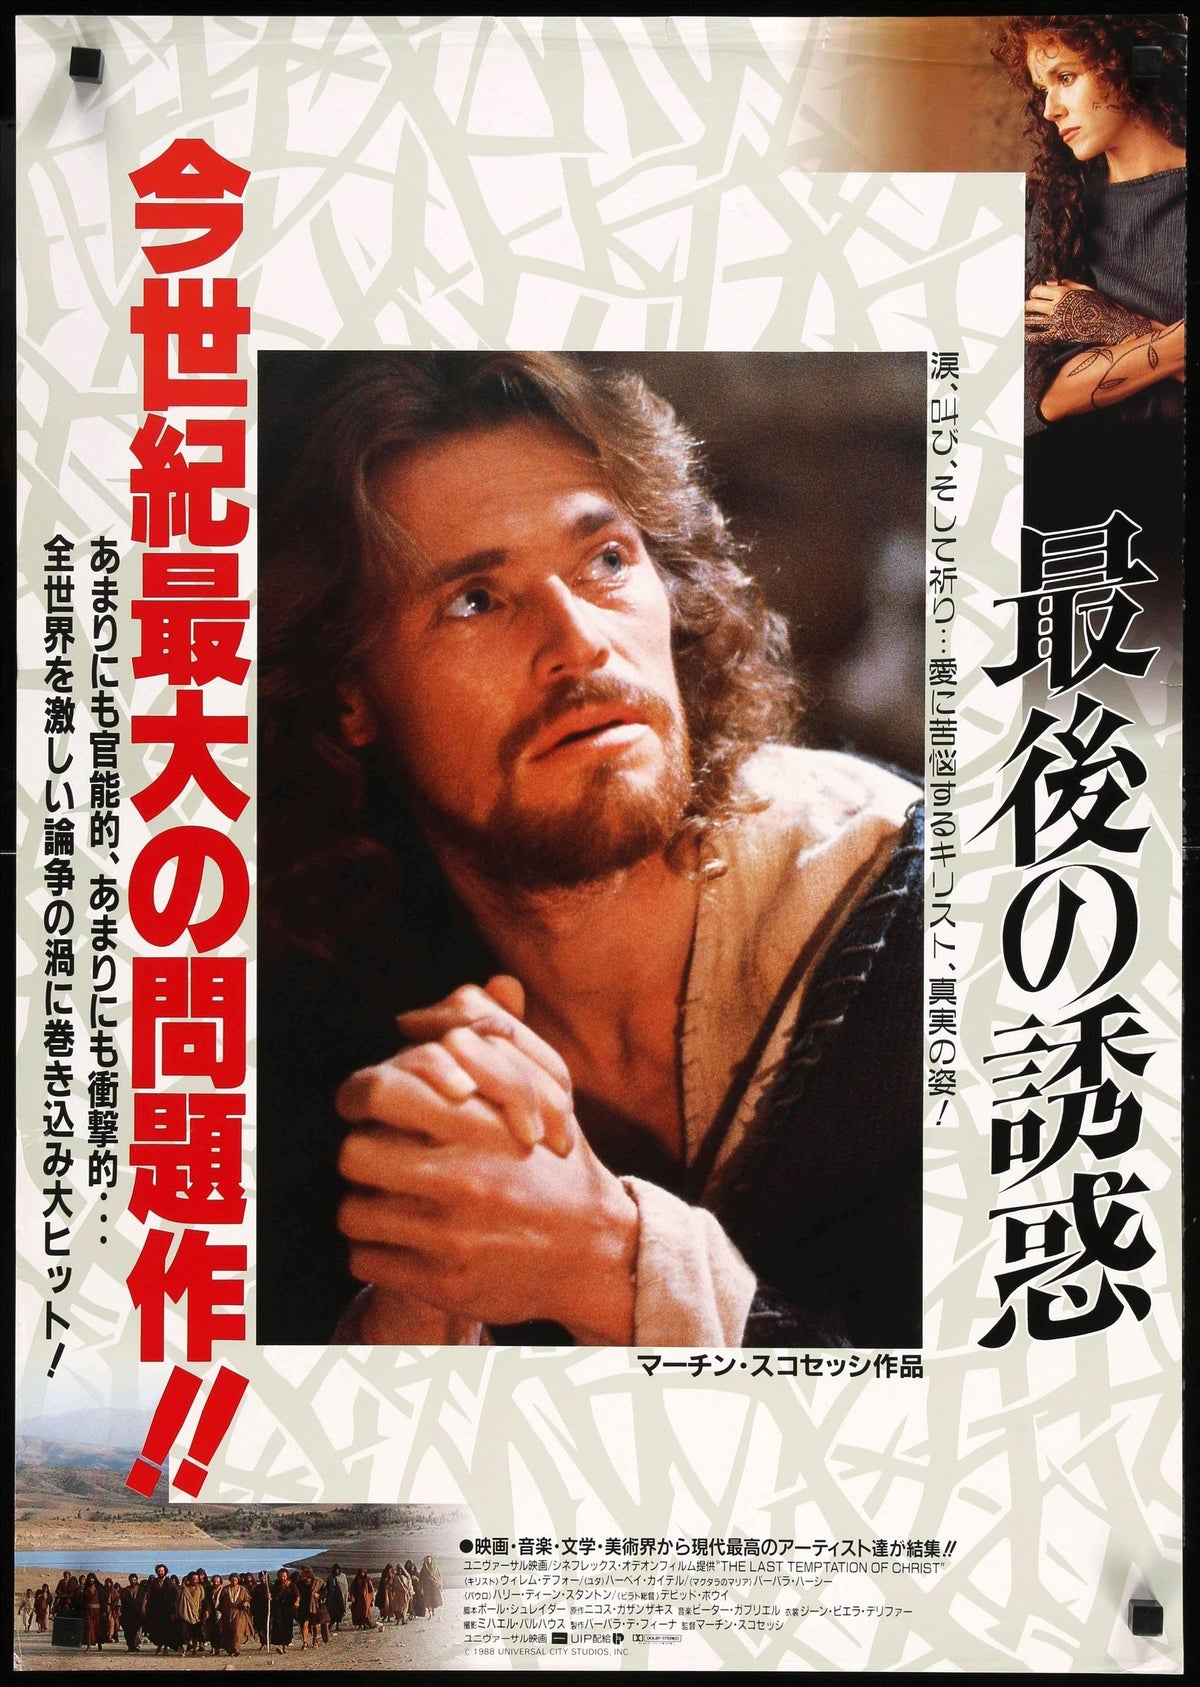 Last Temptation of Christ (1988) original movie poster for sale at Original Film Art